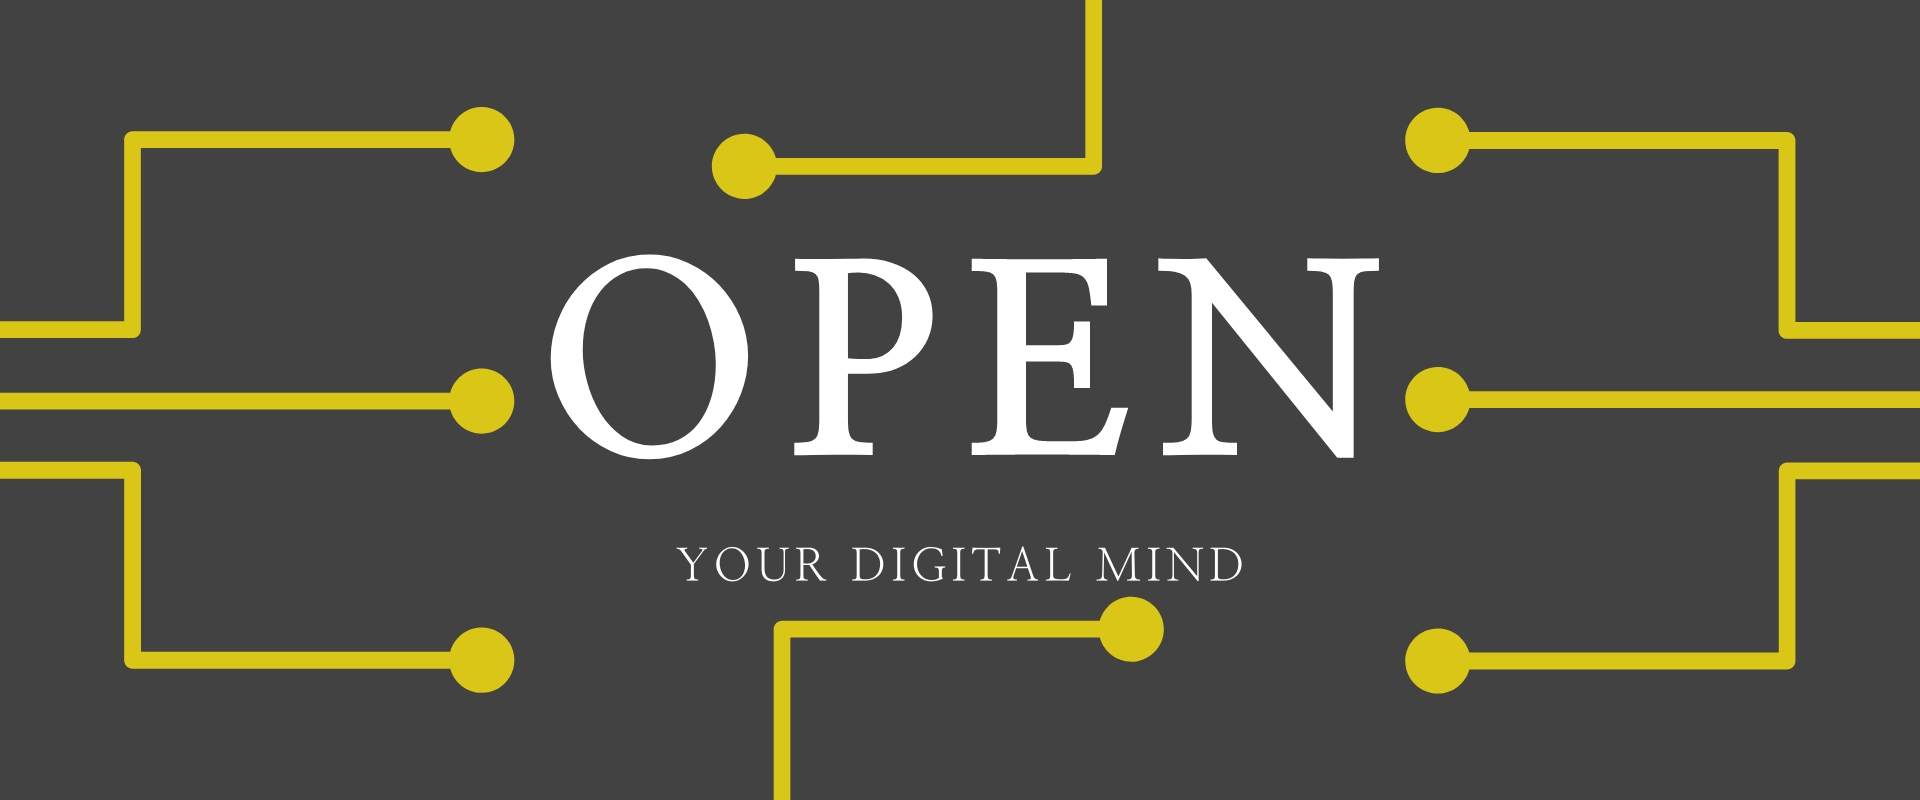 Open your digital mind